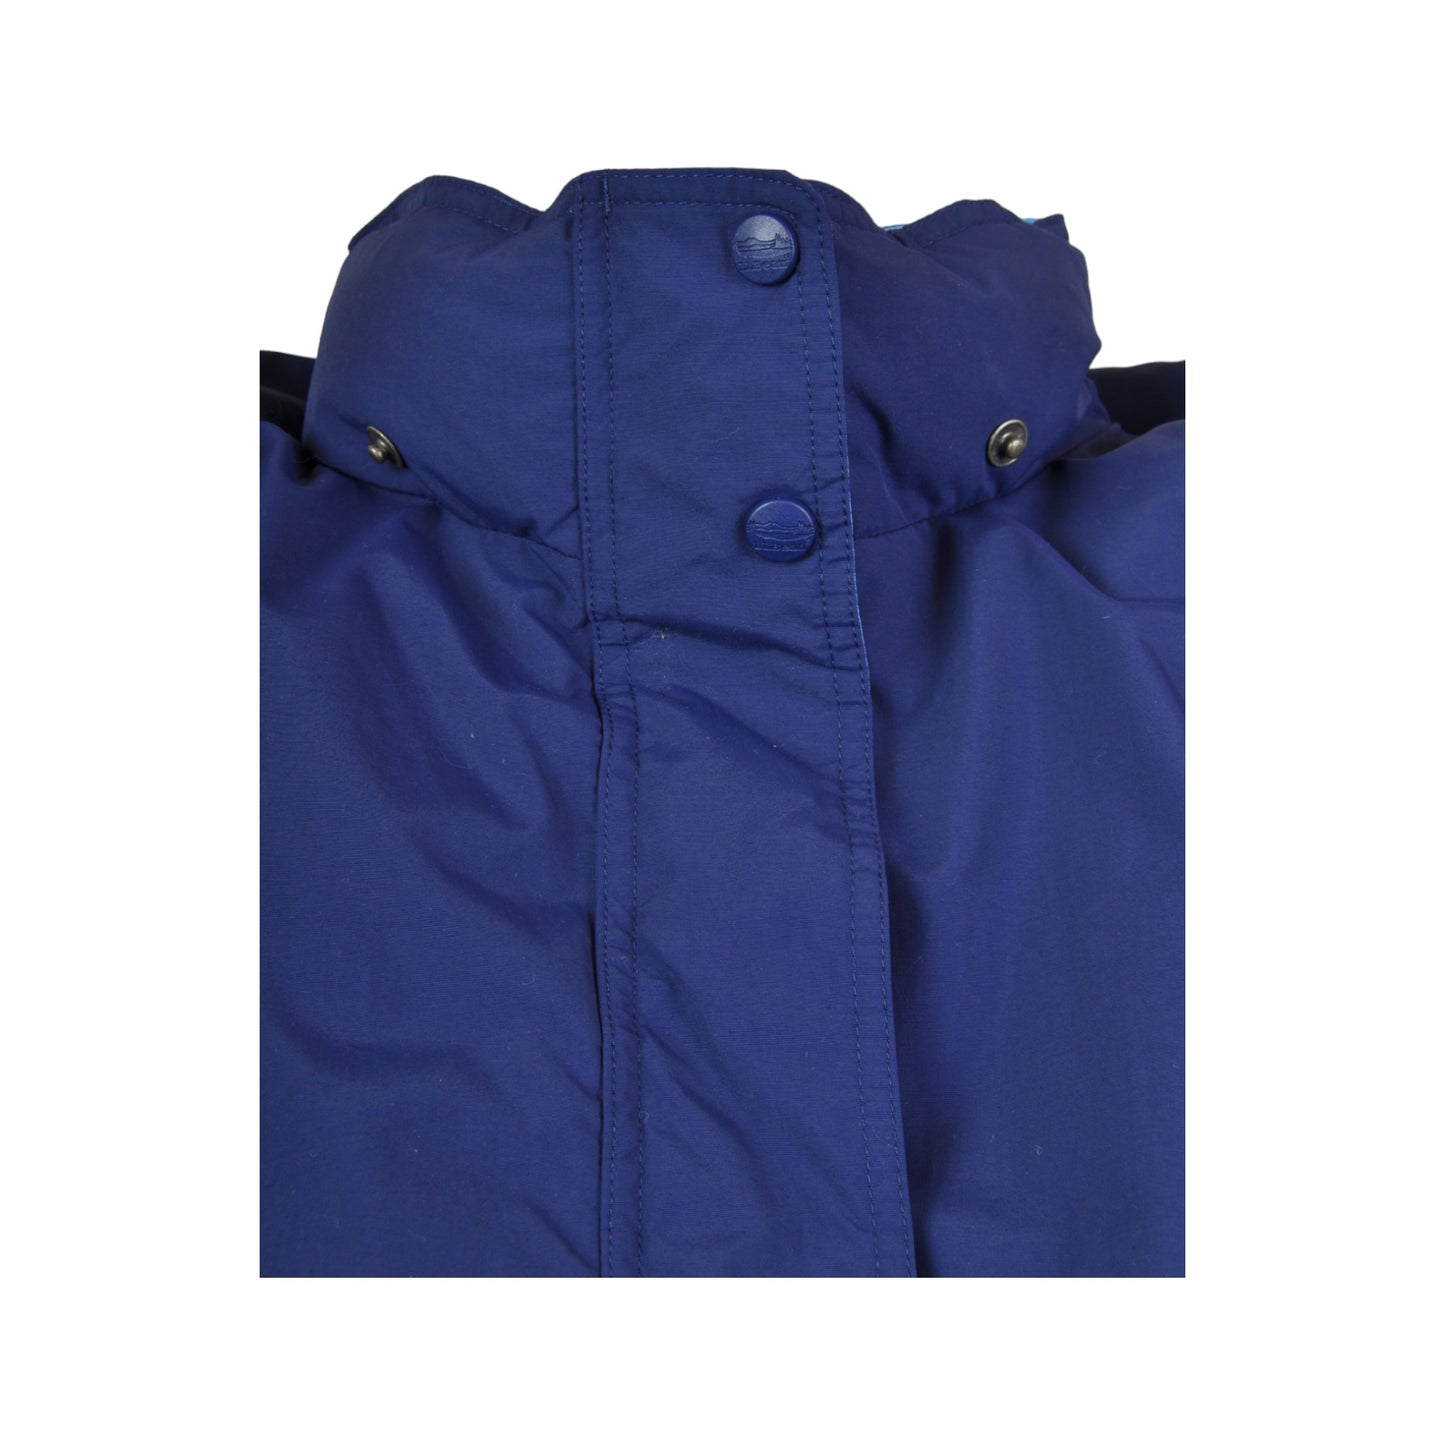 Vintage L.L. Bean Insulated Jacket Blue Ladies Medium